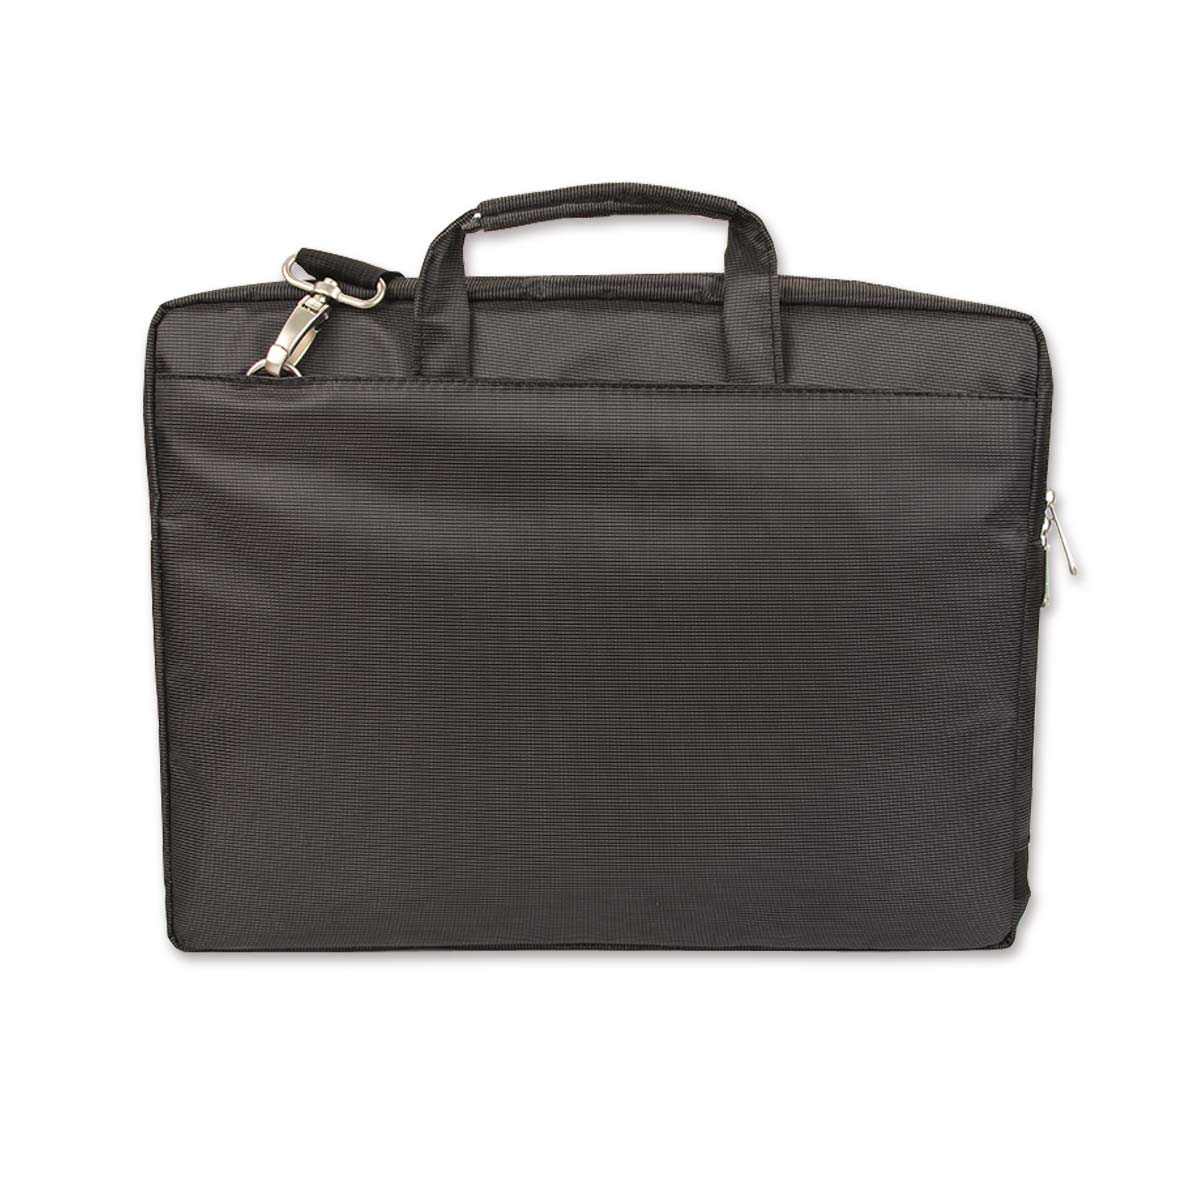 Laptop-Bag – 2015-01 (approx. 39 x 31 x 5 cm, black)